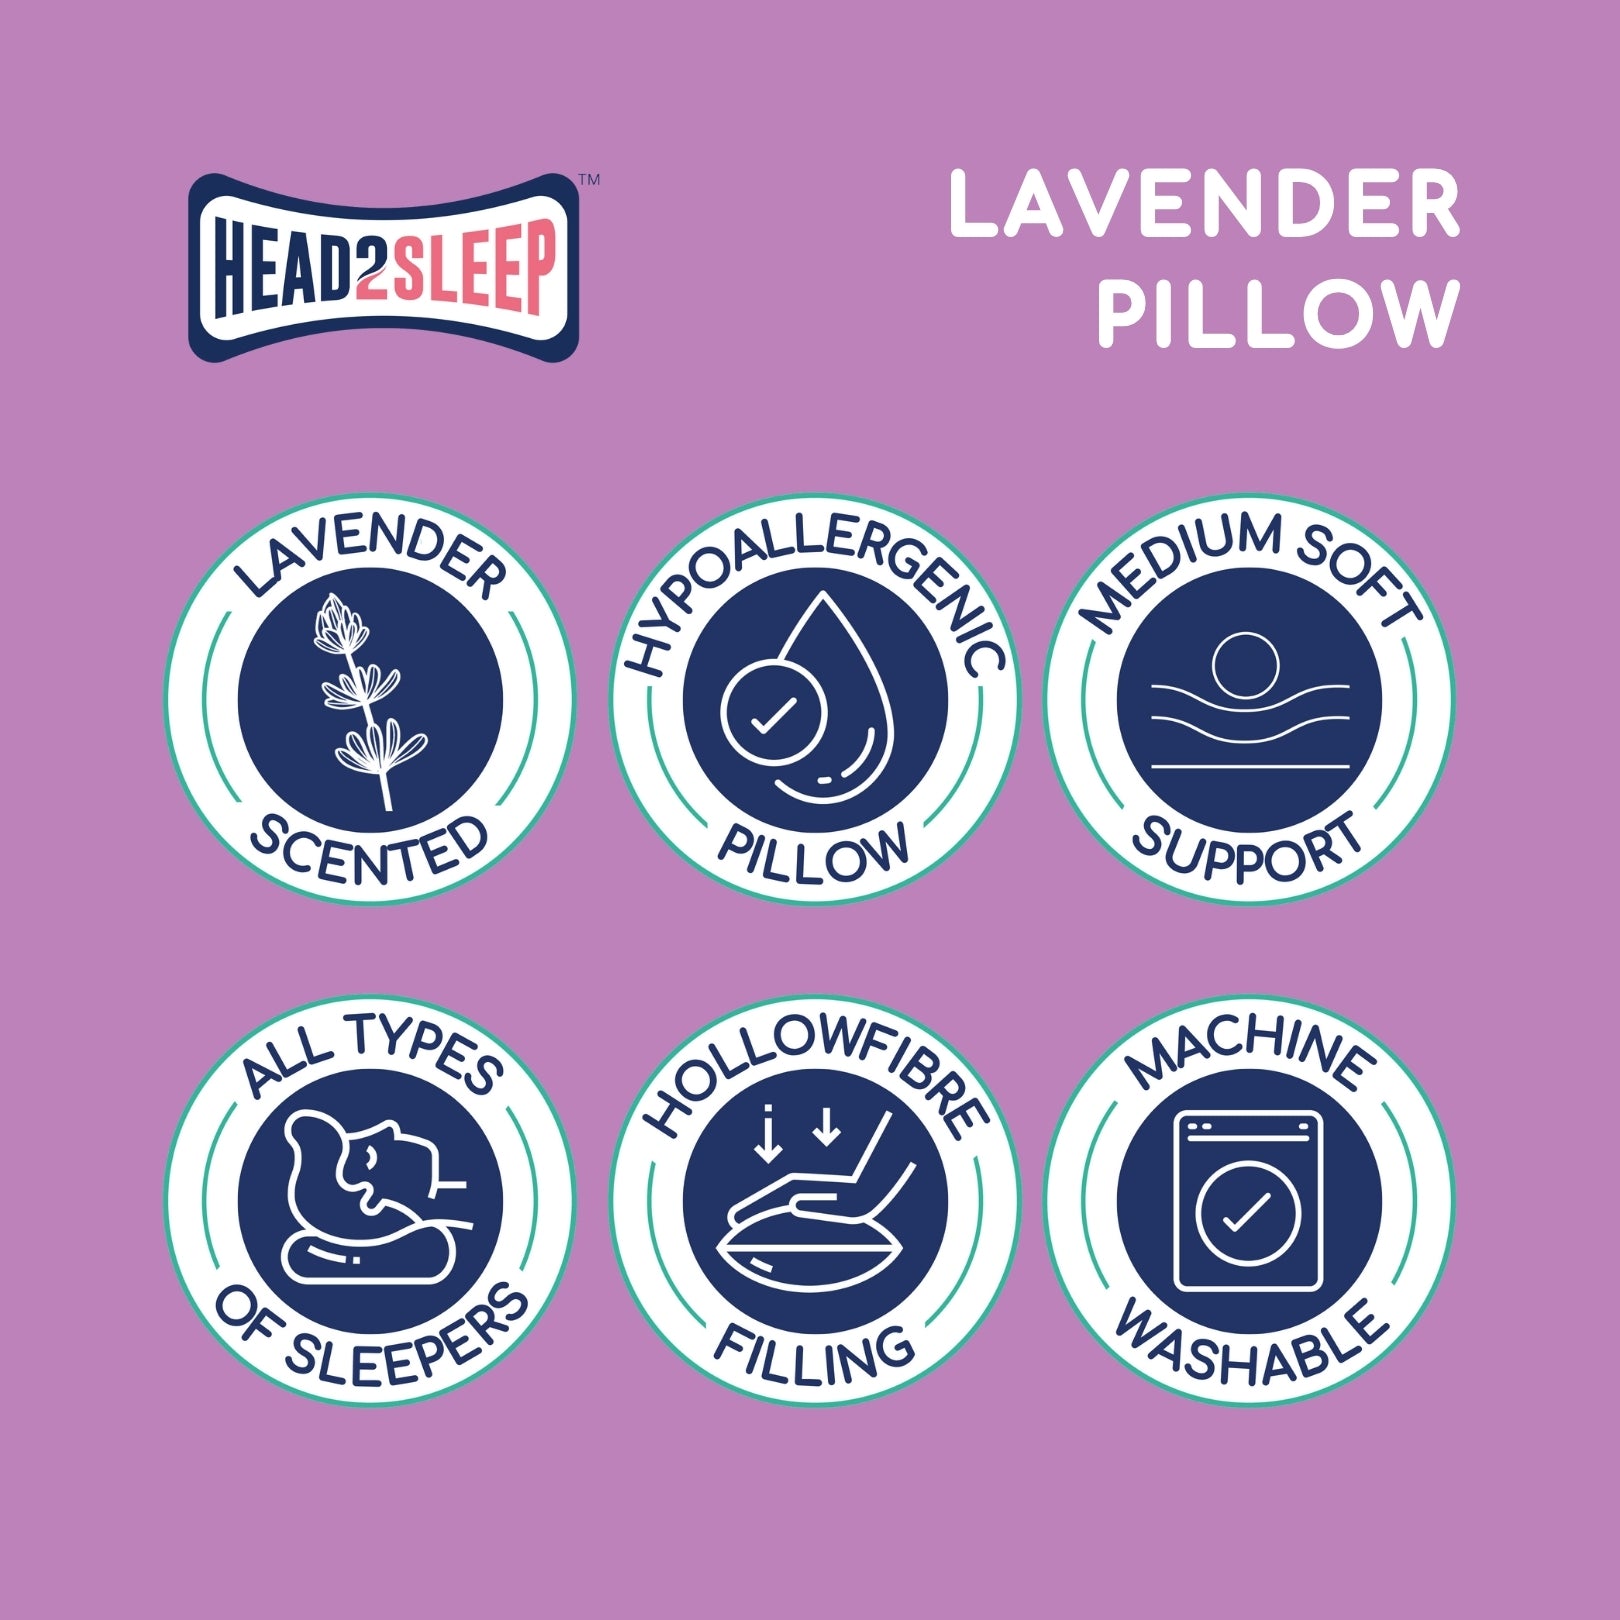 Head2Sleep Lavender Pillow